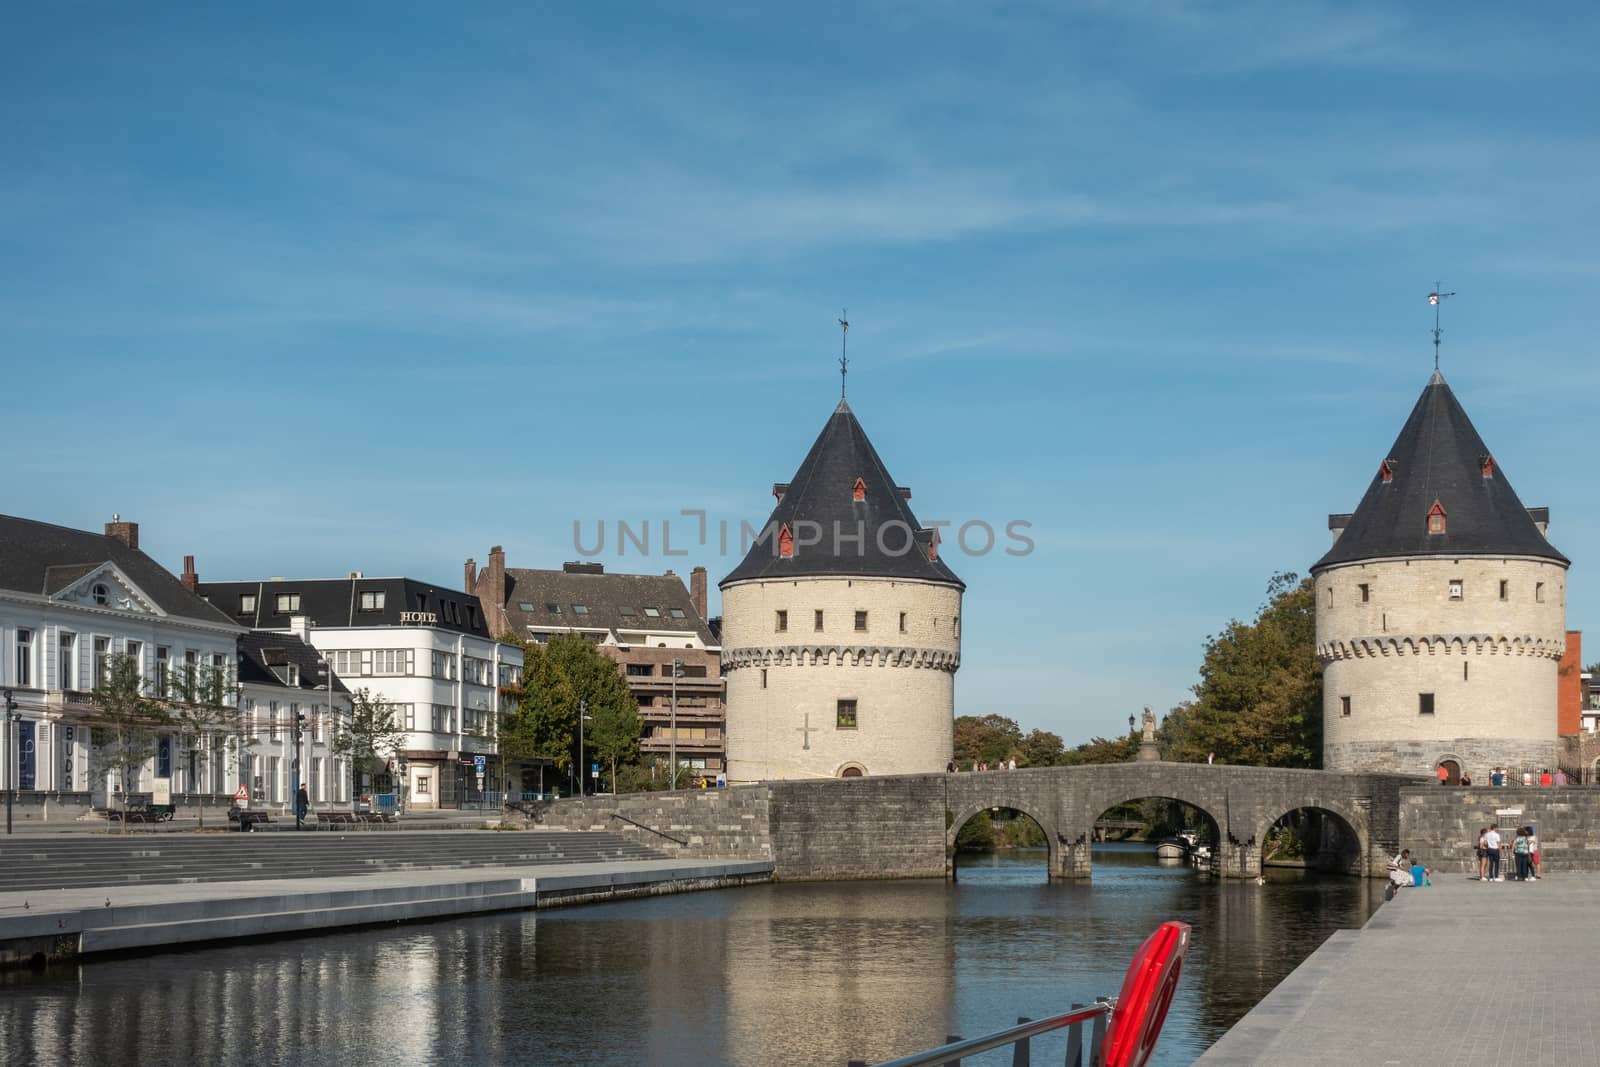 Kortrijk, Flanders, Belgium - September 17, 2018: Iconic pale brick Broel Towers on bridge over Lys River under blue sky. People and buildings on side.